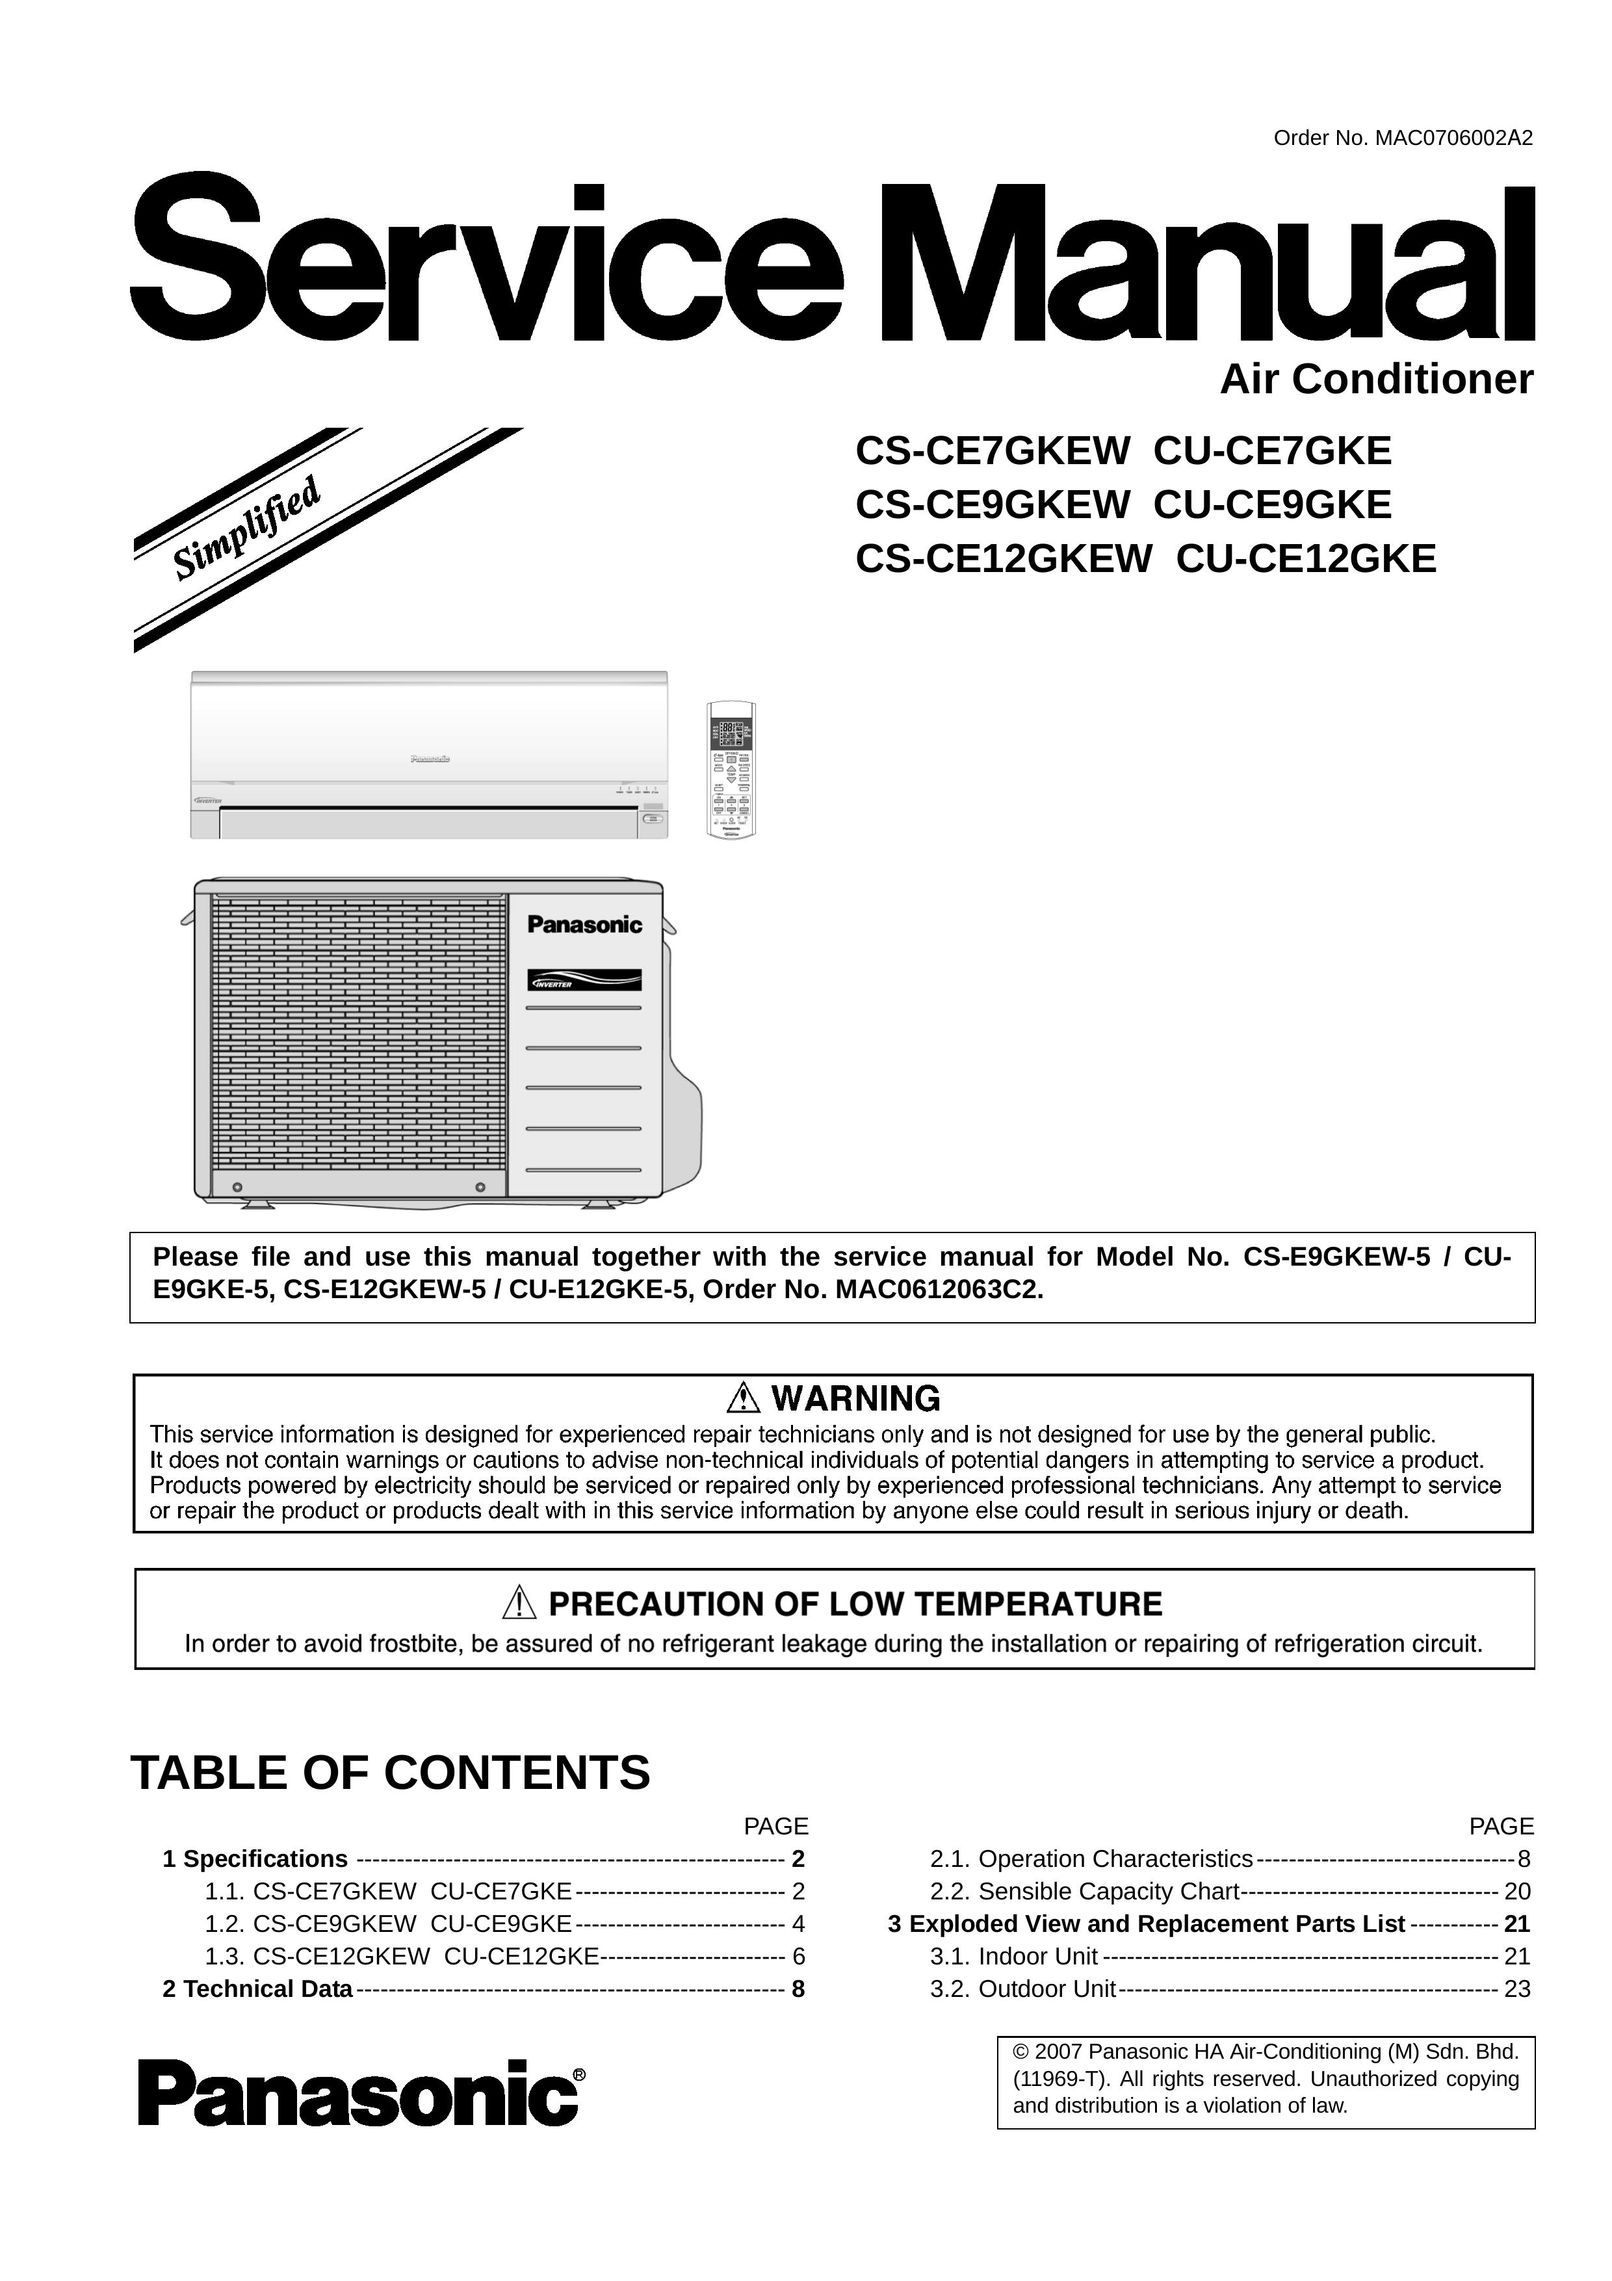 Panasonic CS-CE12GKEW Air Conditioner User Manual